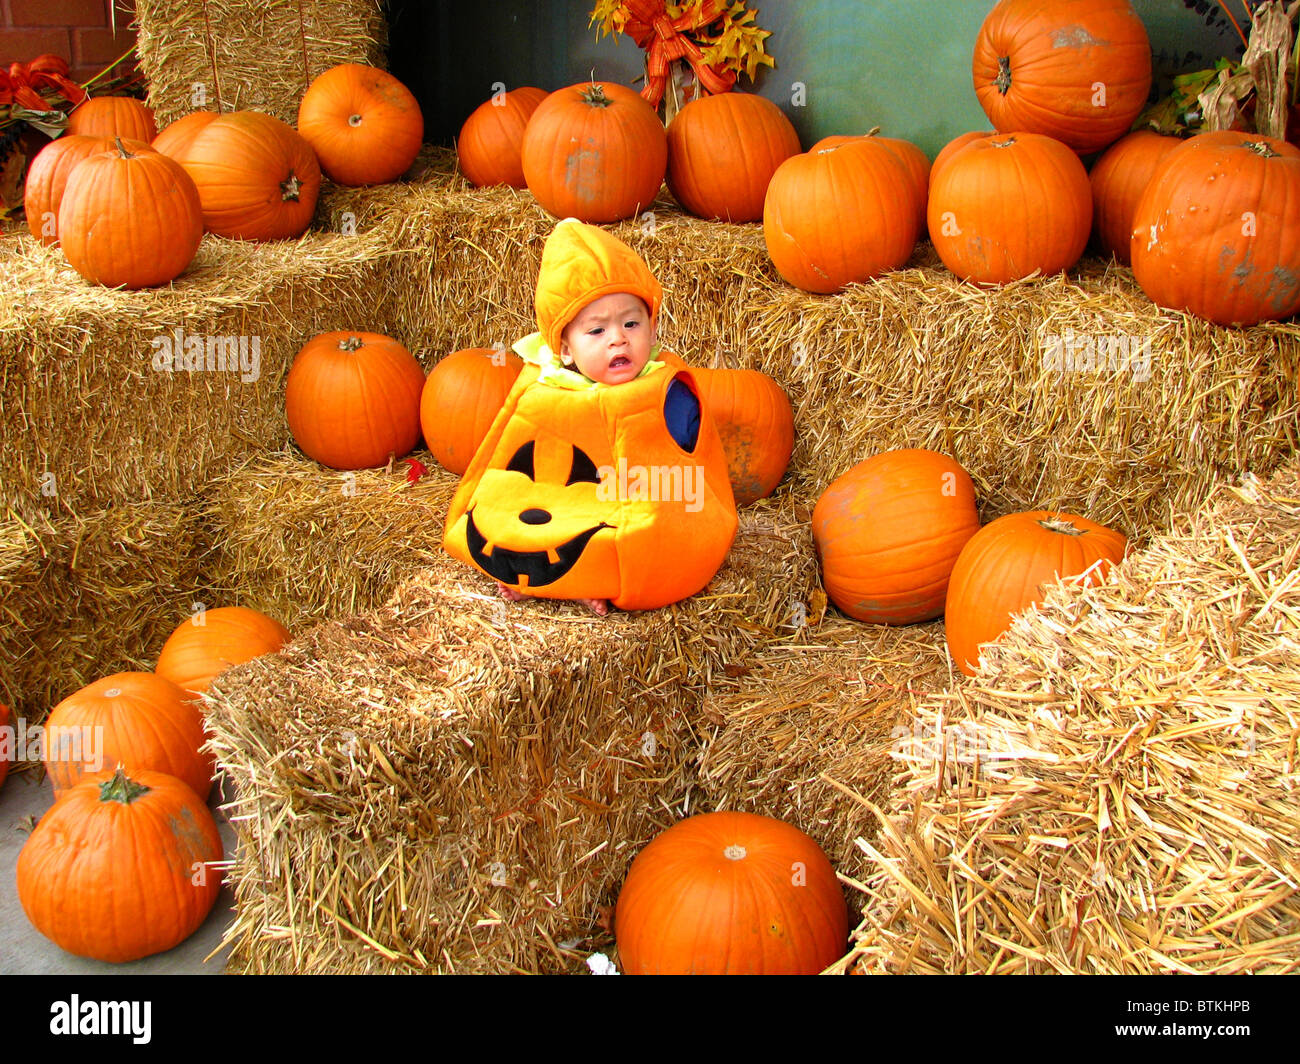 Baby dressed up in pumpkin Halloween costume sitting among pumpkins Stock  Photo - Alamy